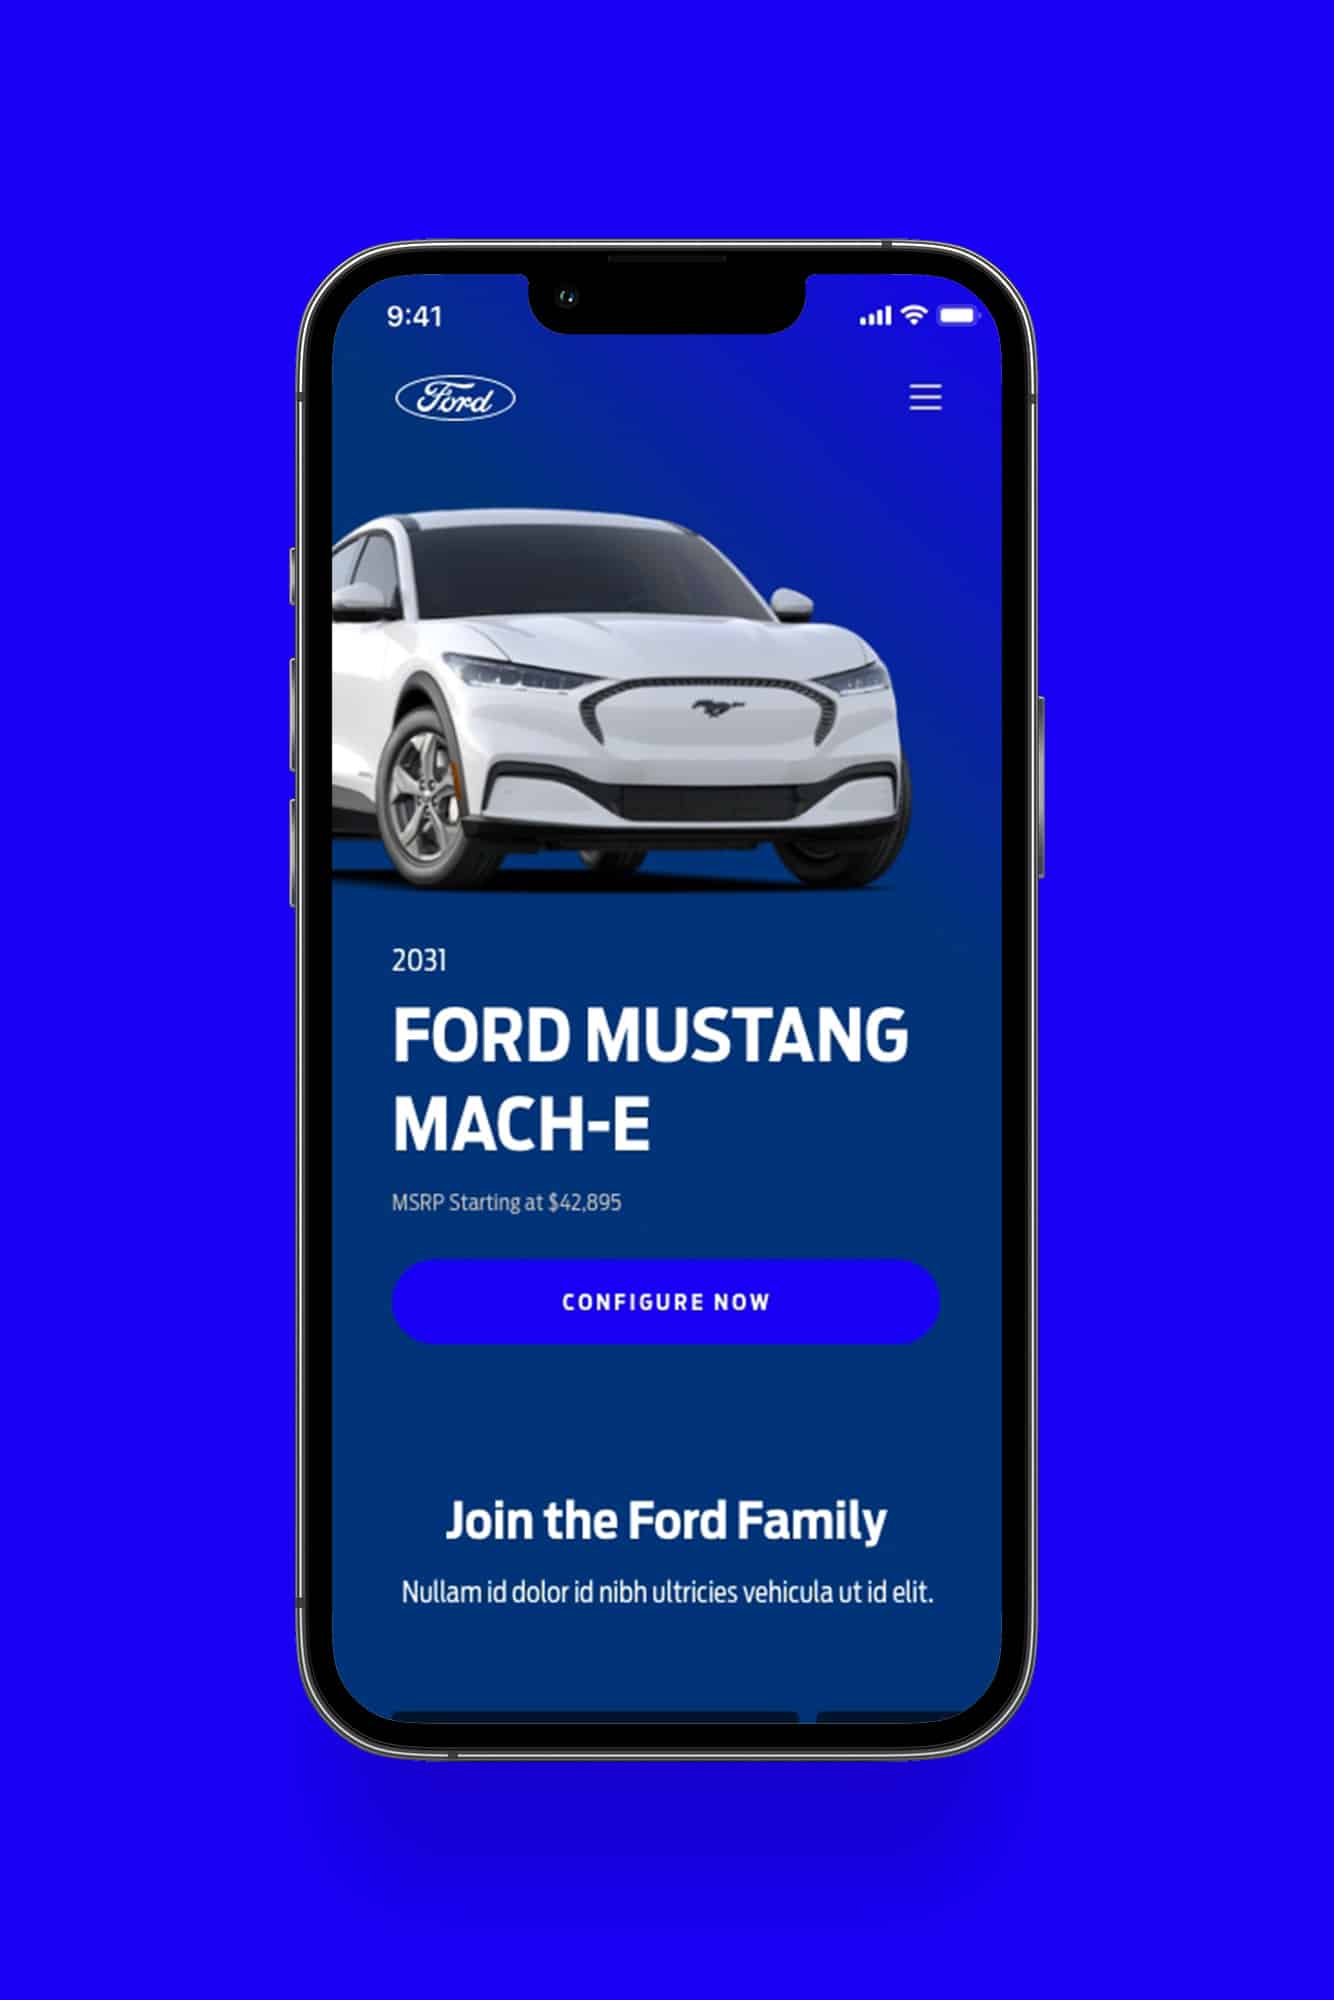 Ford Future Vision